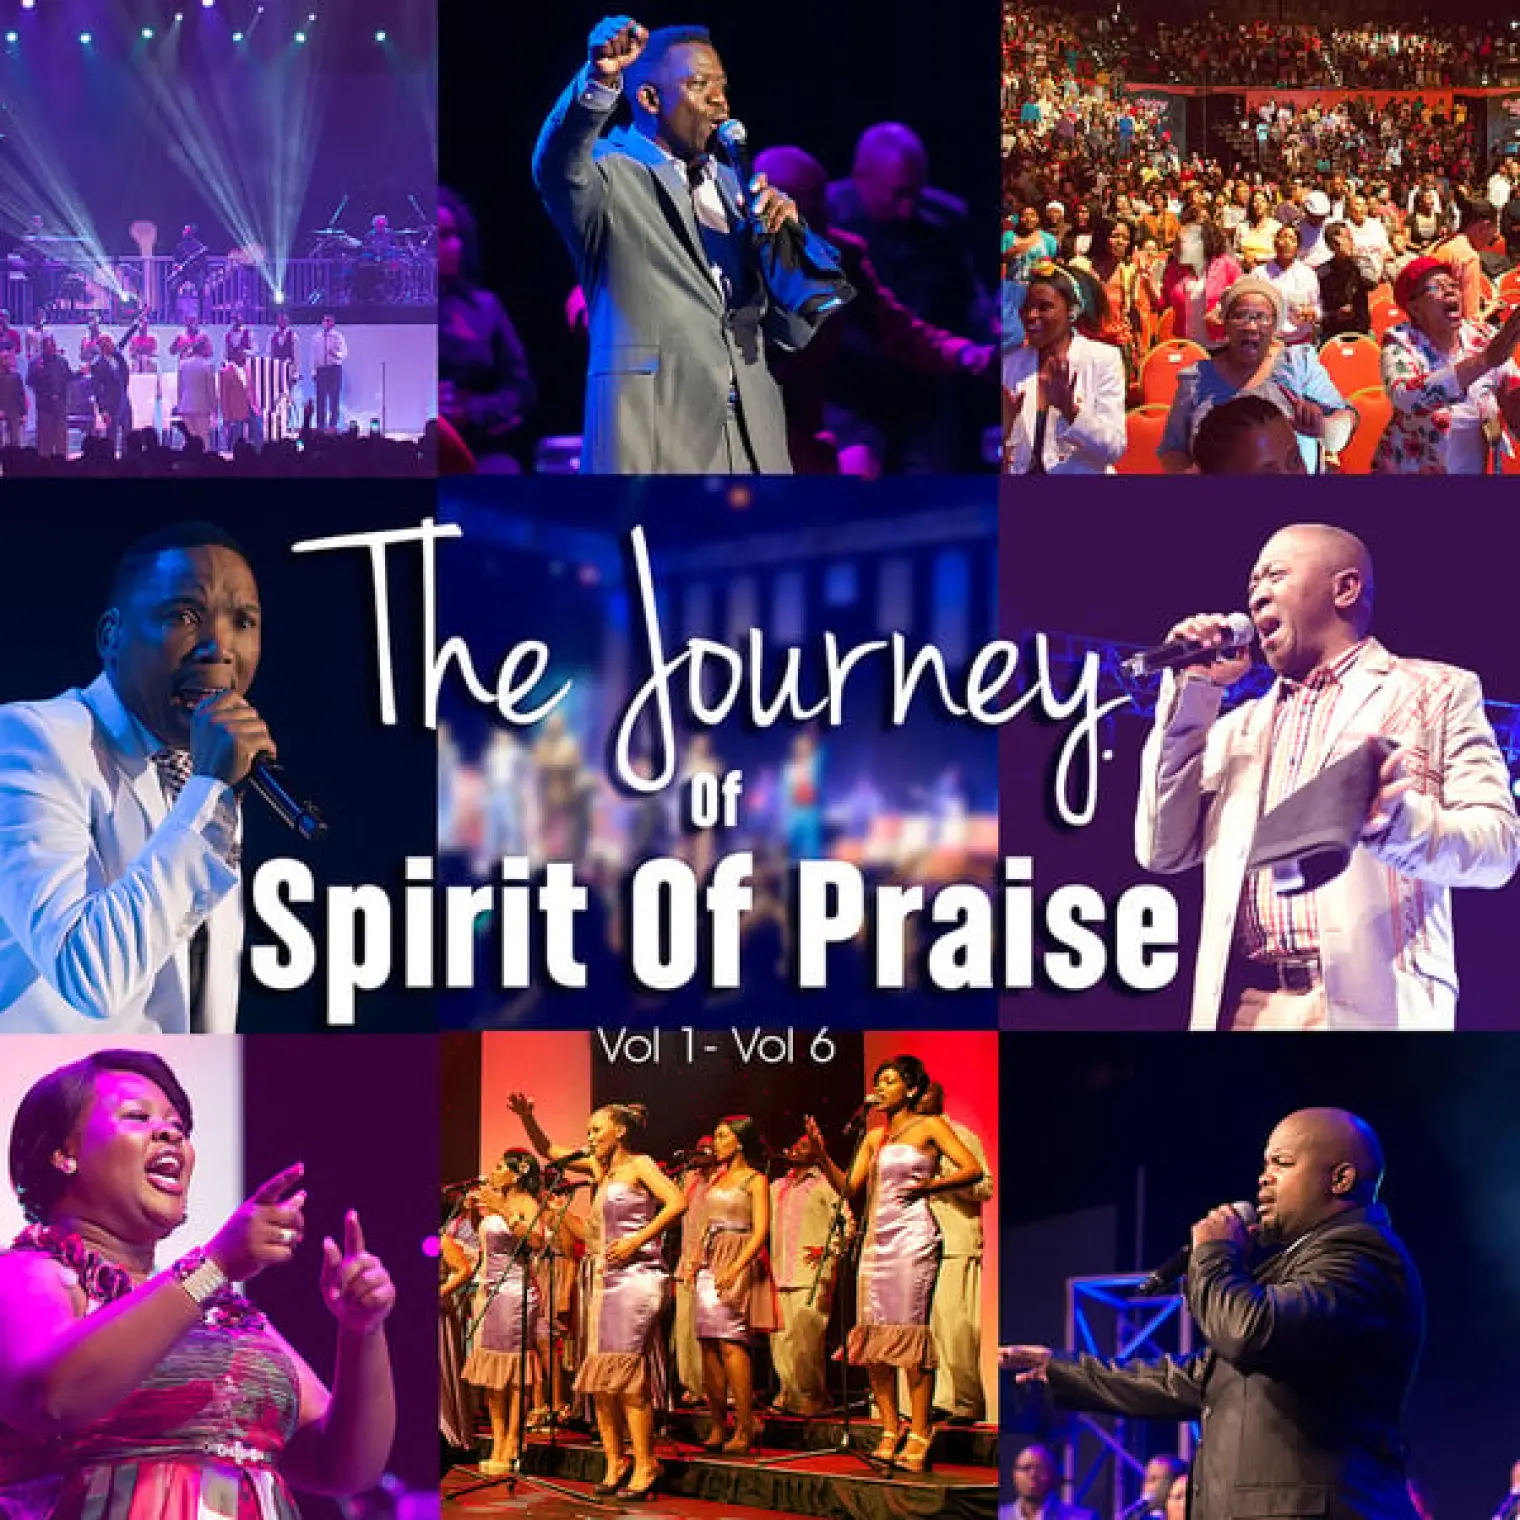 The Journey of Spirit of Praise, Vol. 1 - Vol. 6 (Live) -  Spirit of Praise 